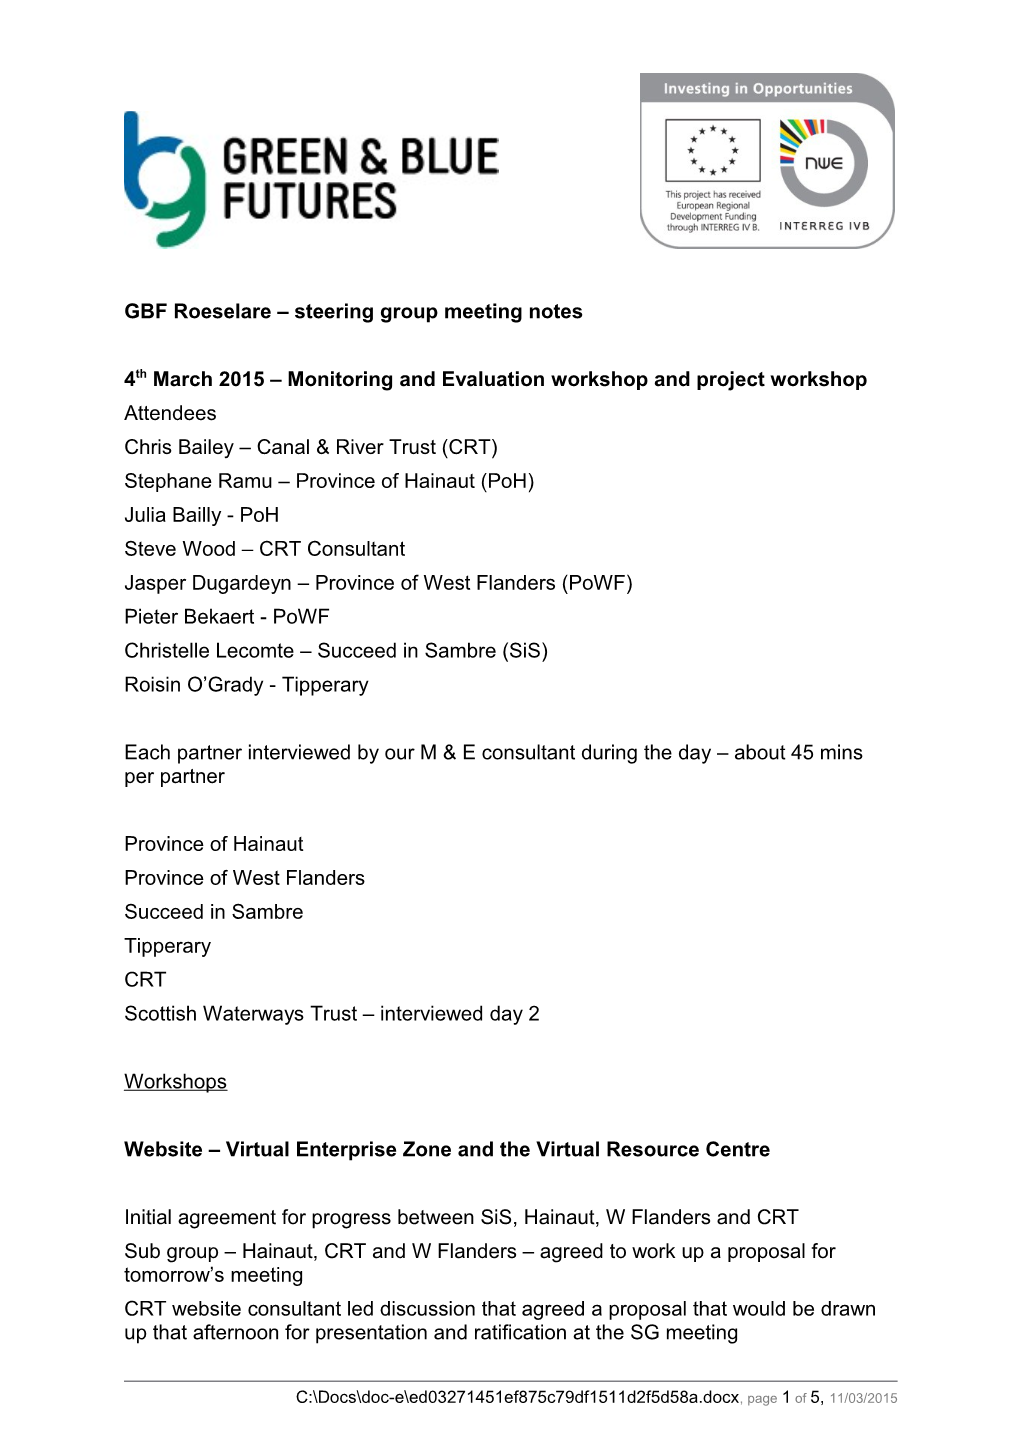 GBF Roeselare Steering Group Meeting Notes